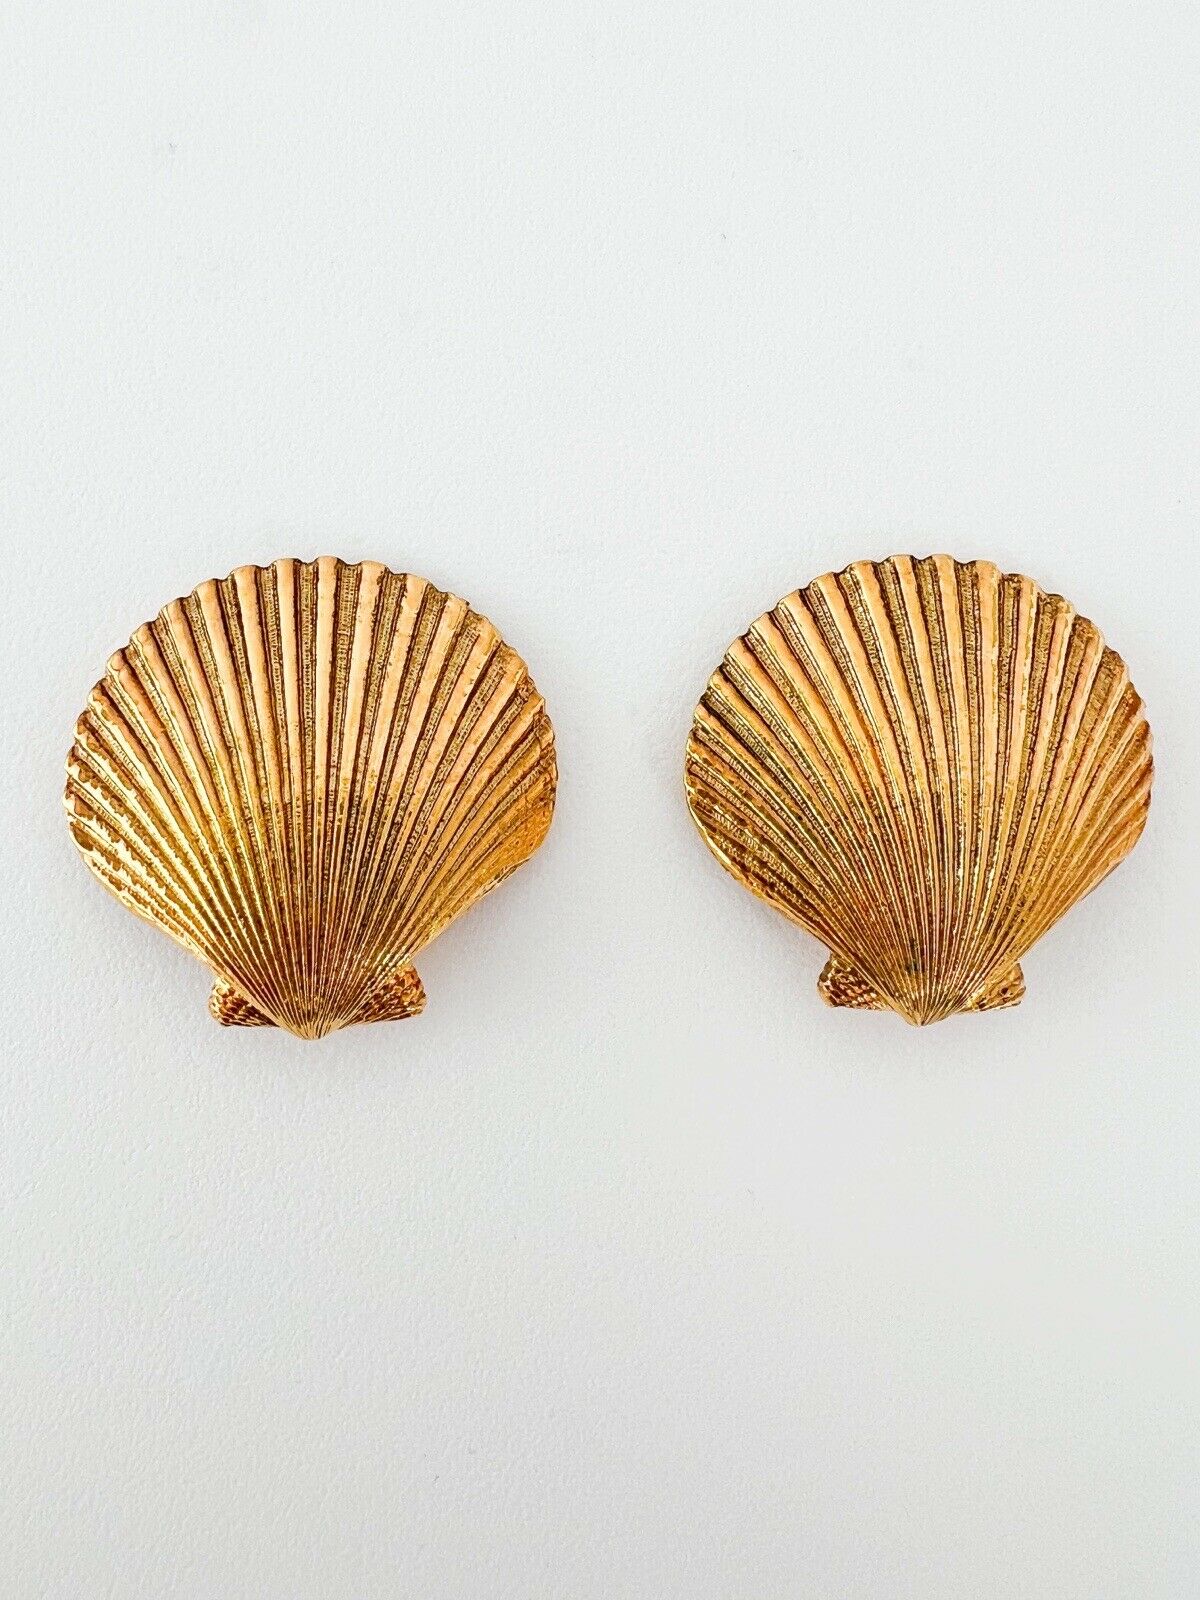 YSL Yves Saint Laurent Vintage Earrings Made in France Gold Shell